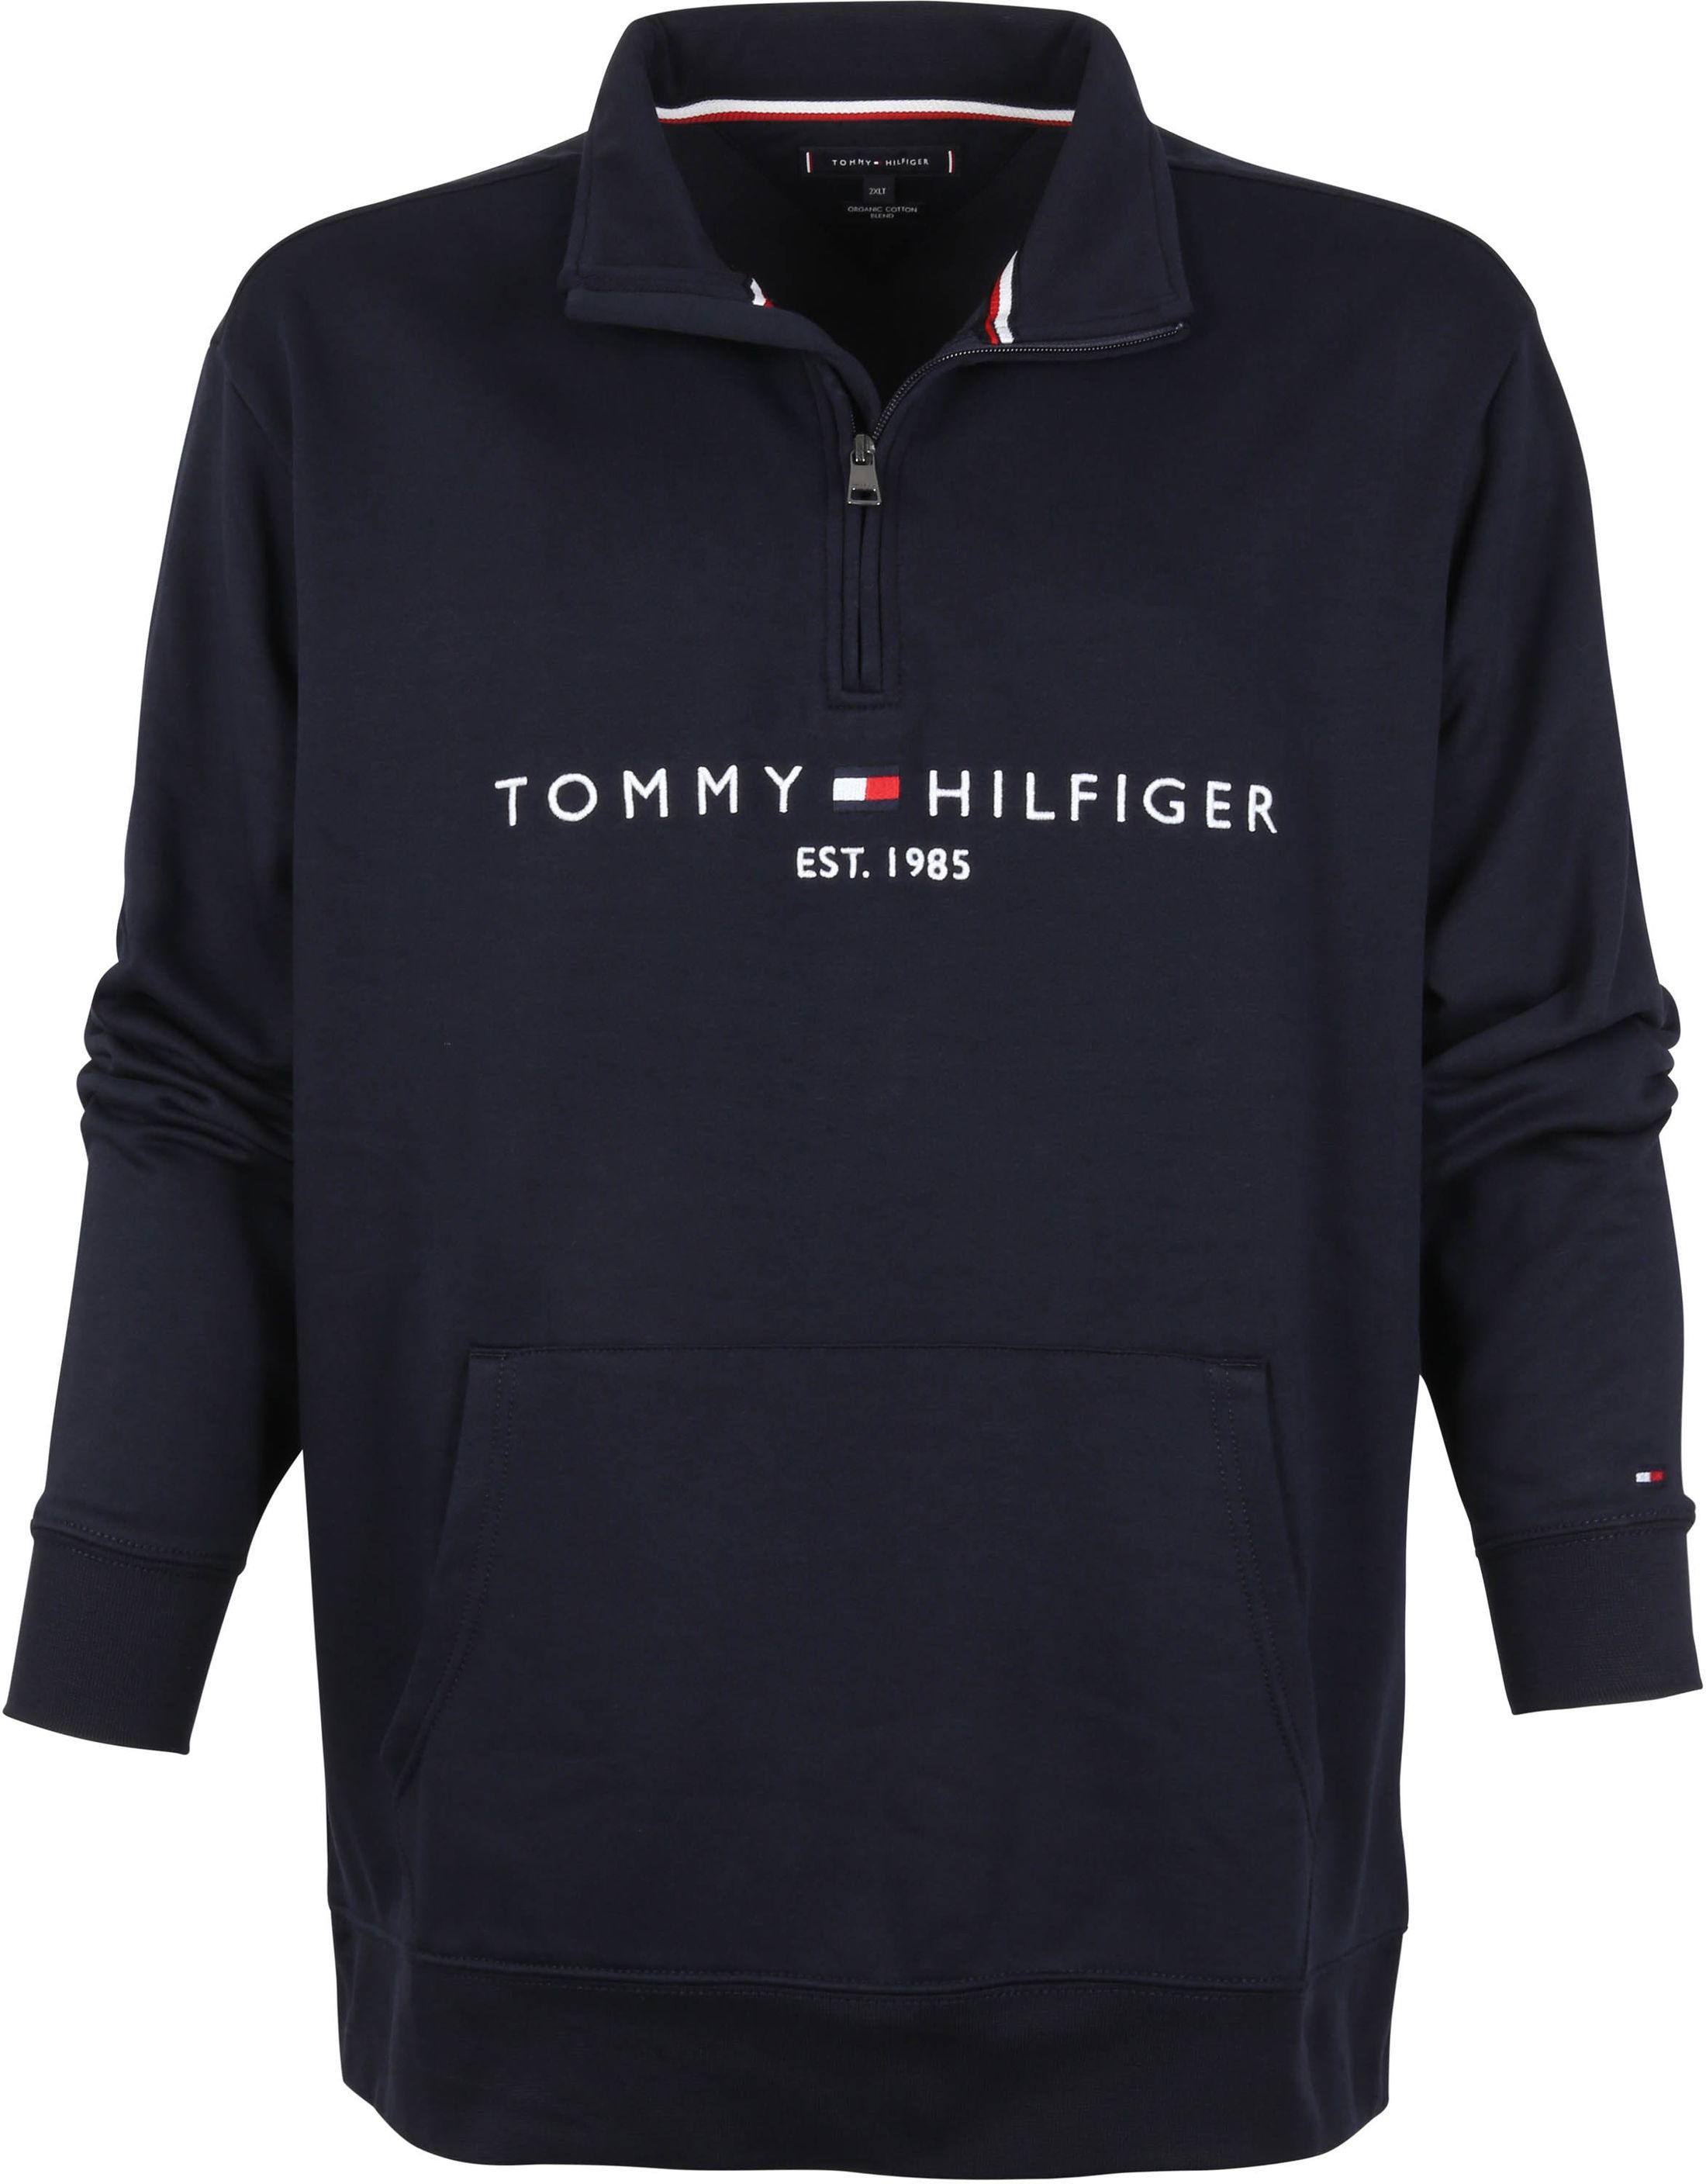 Tommy Hilfiger Big and Tall Pullover Navy Blue Dark Blue size XXL